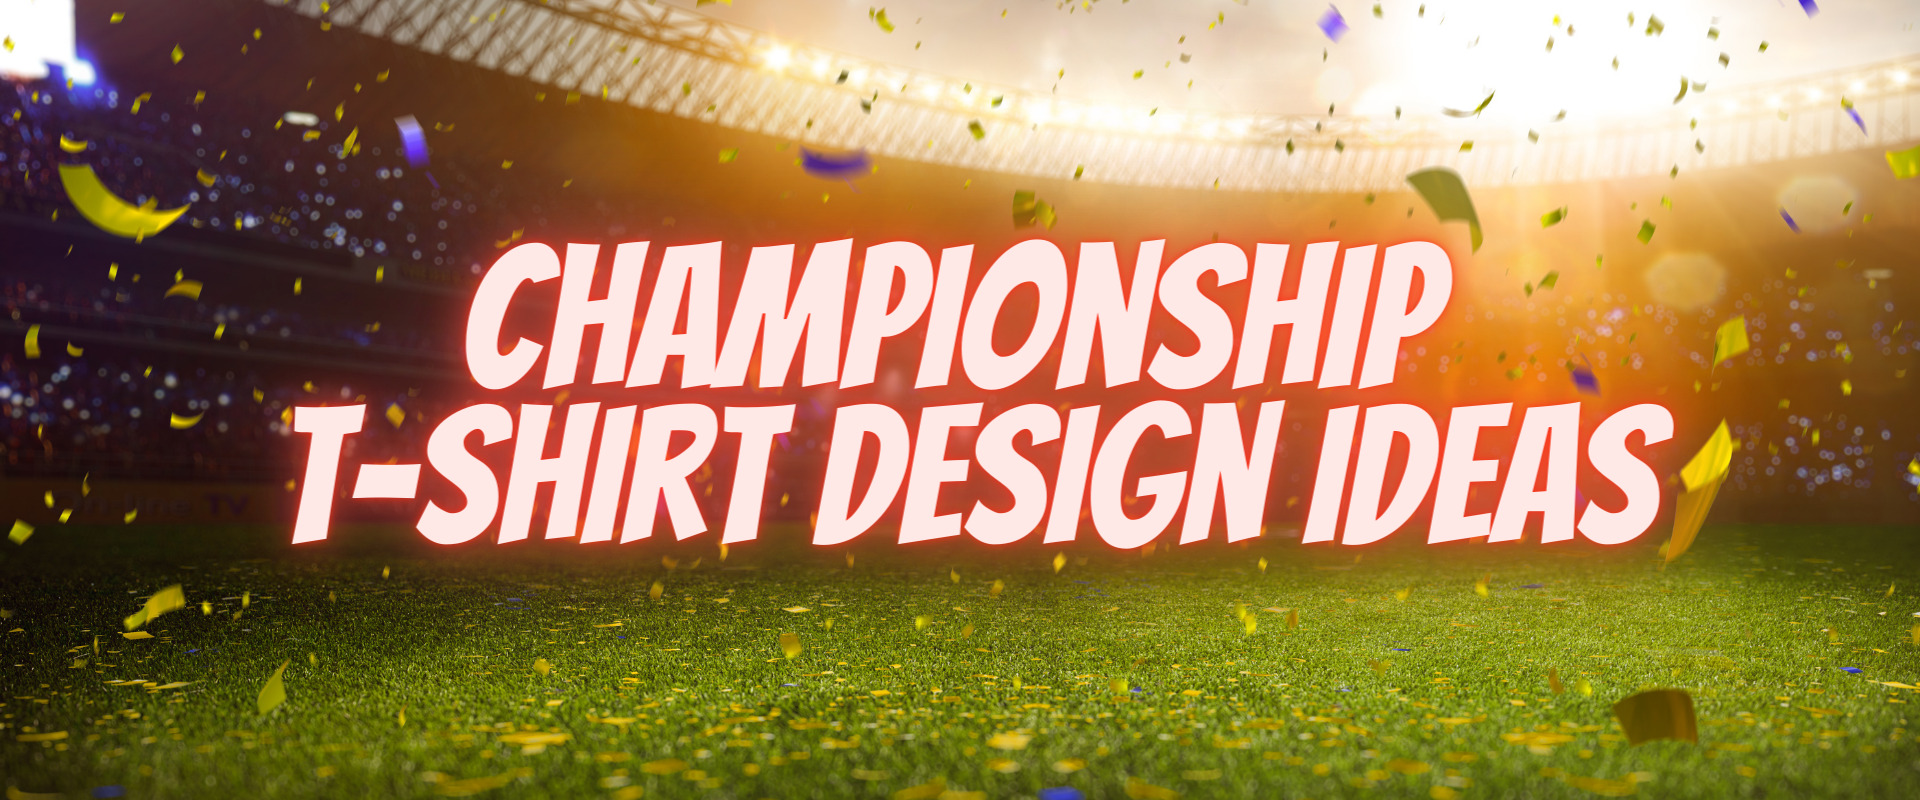 championship t-shirt design ideas